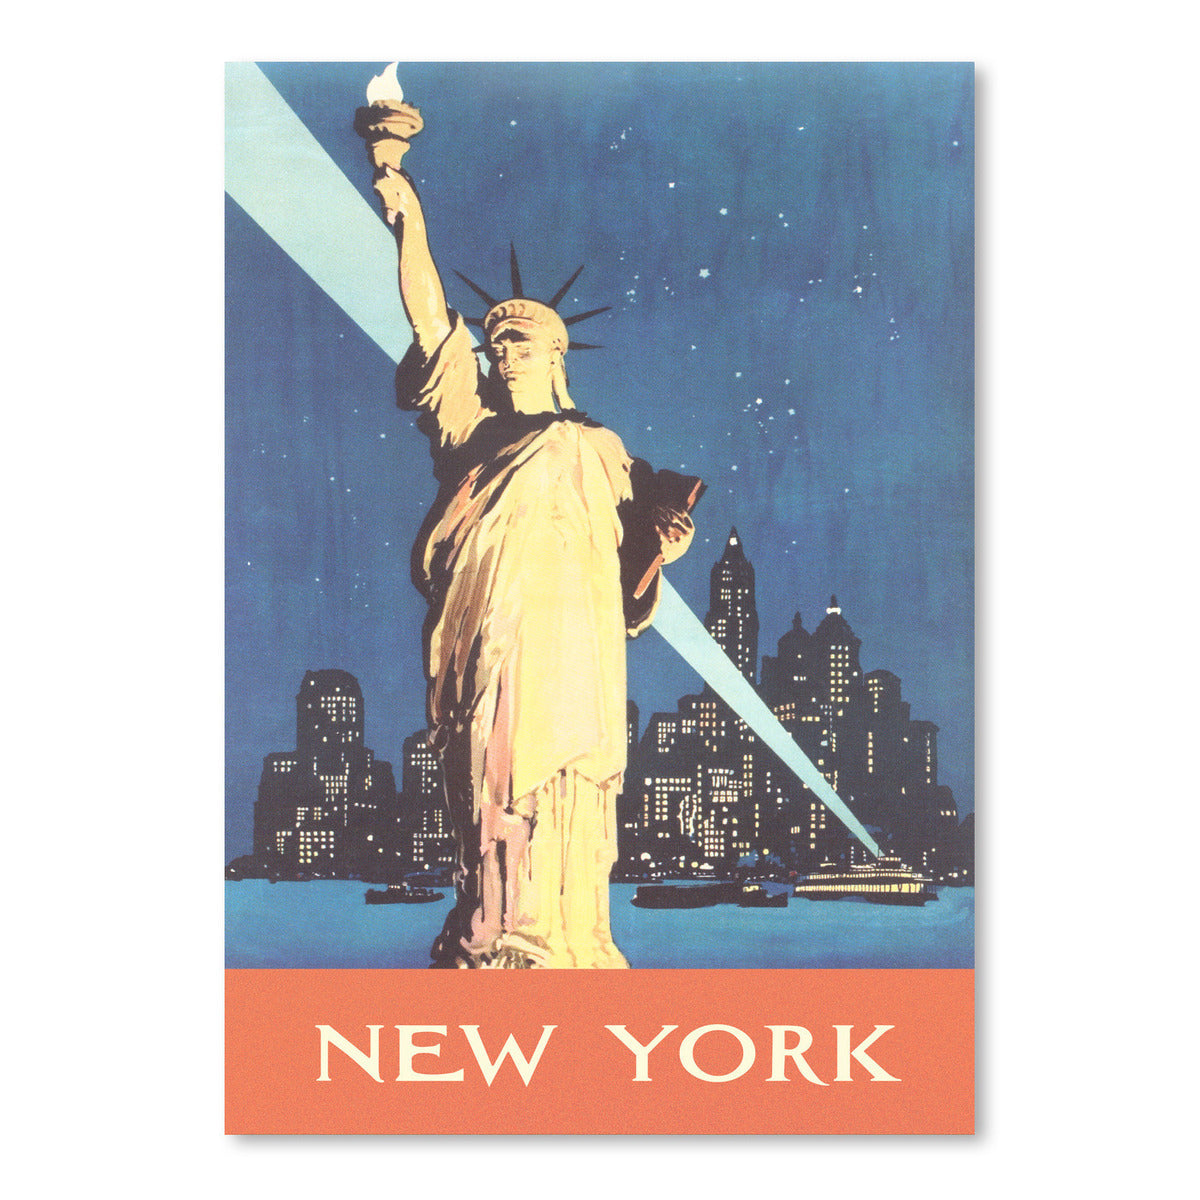 New York Travel Poster by Found Image Press Art Print - Art Print - Americanflat